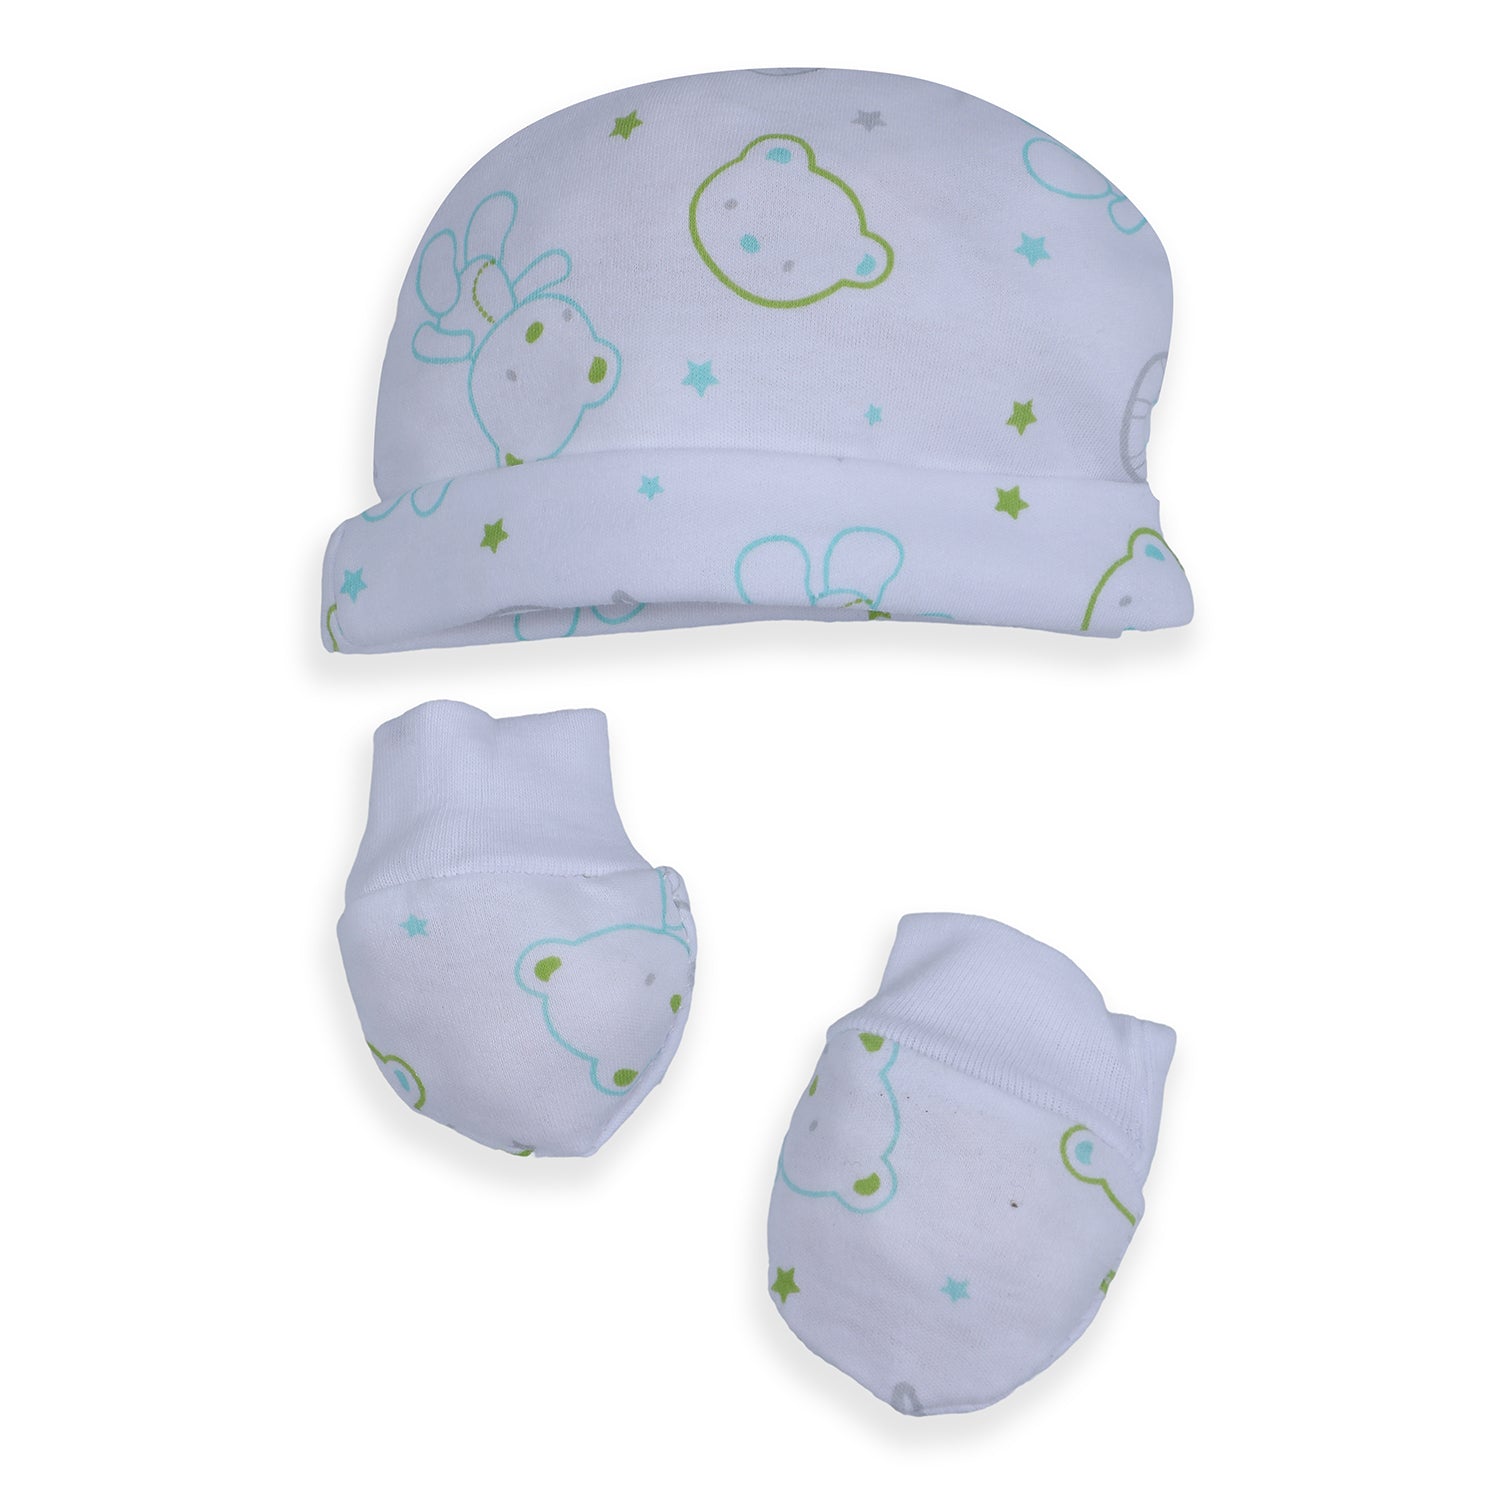 Baby Moo Papa Bear Infant Soft 5 pcs Romper Gift Set - White - Baby Moo